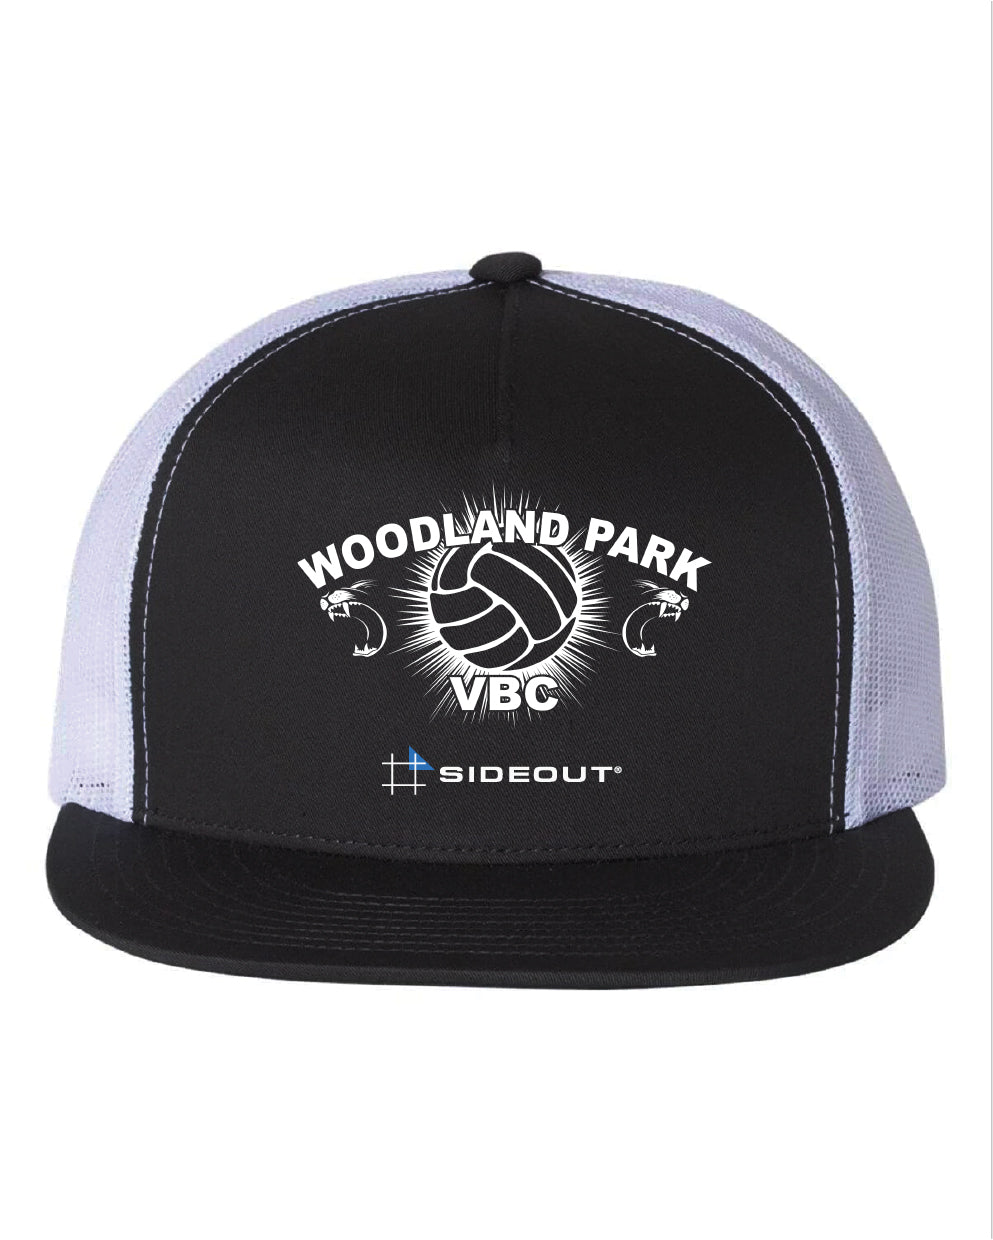 Woodland Park Hat Black